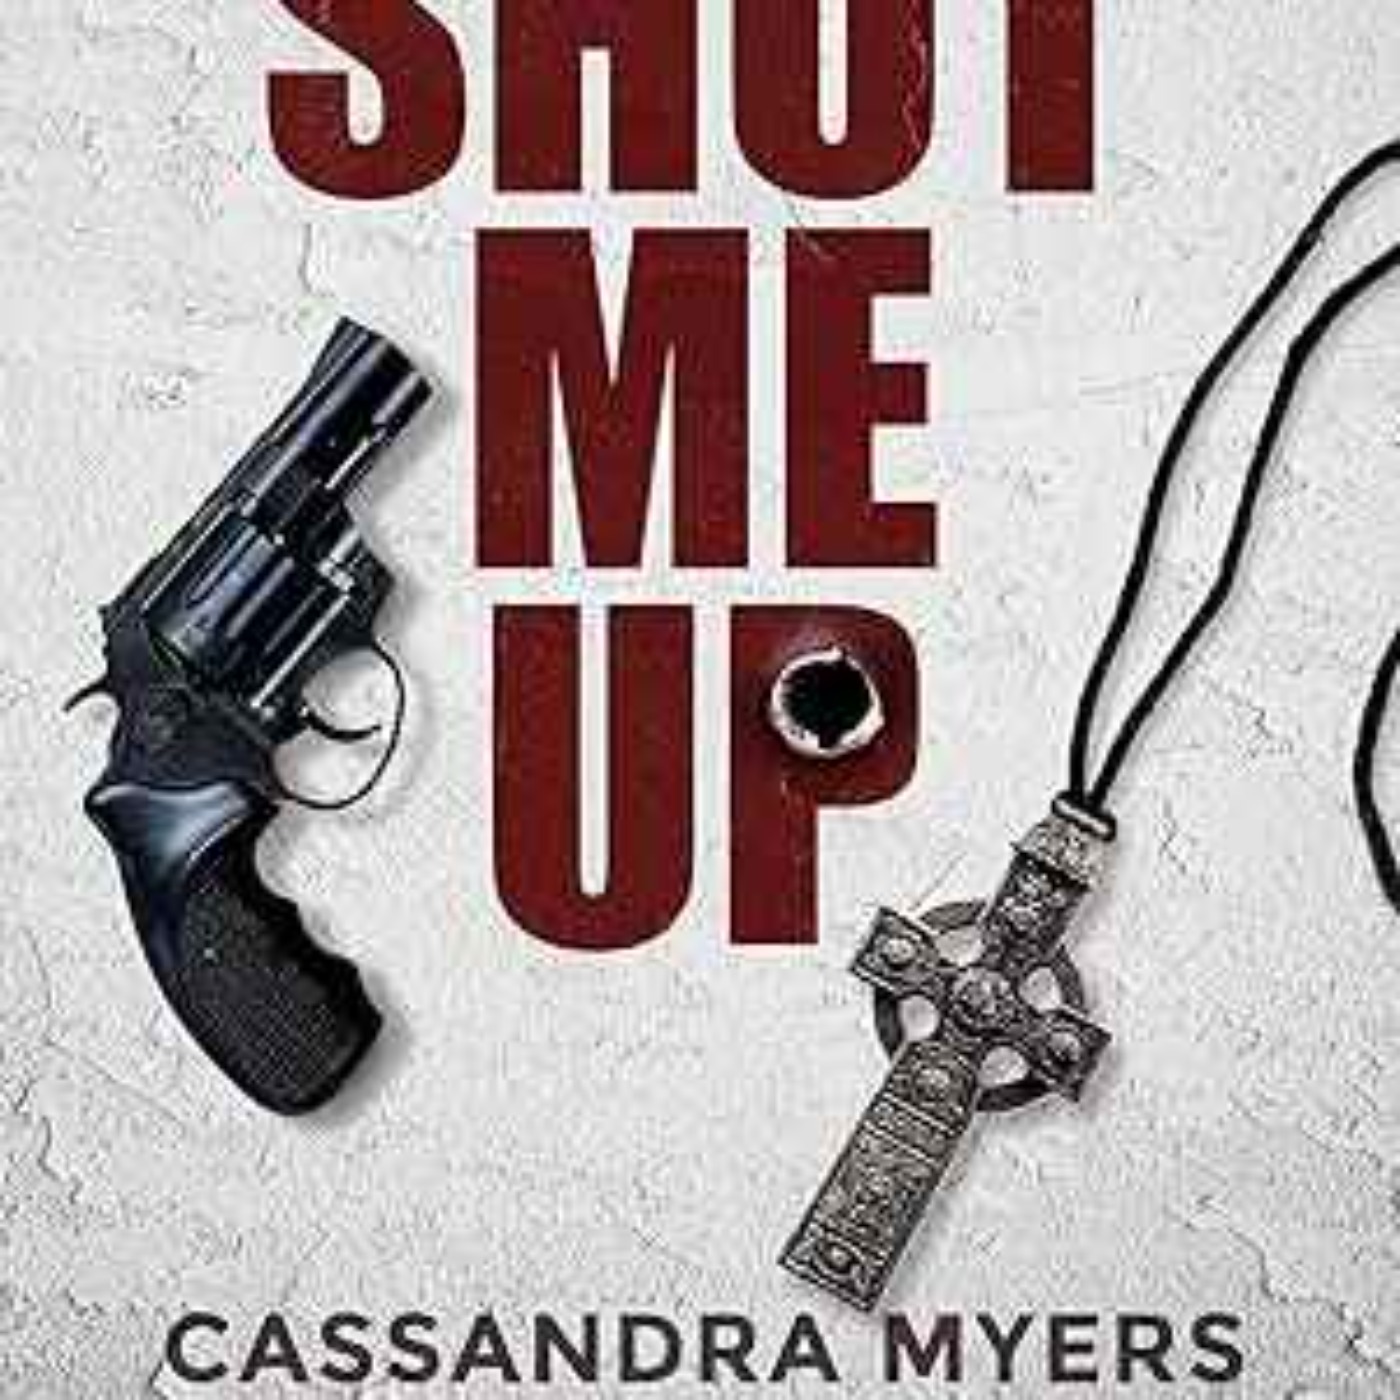 Cassandra Myers - They Shut Me Up